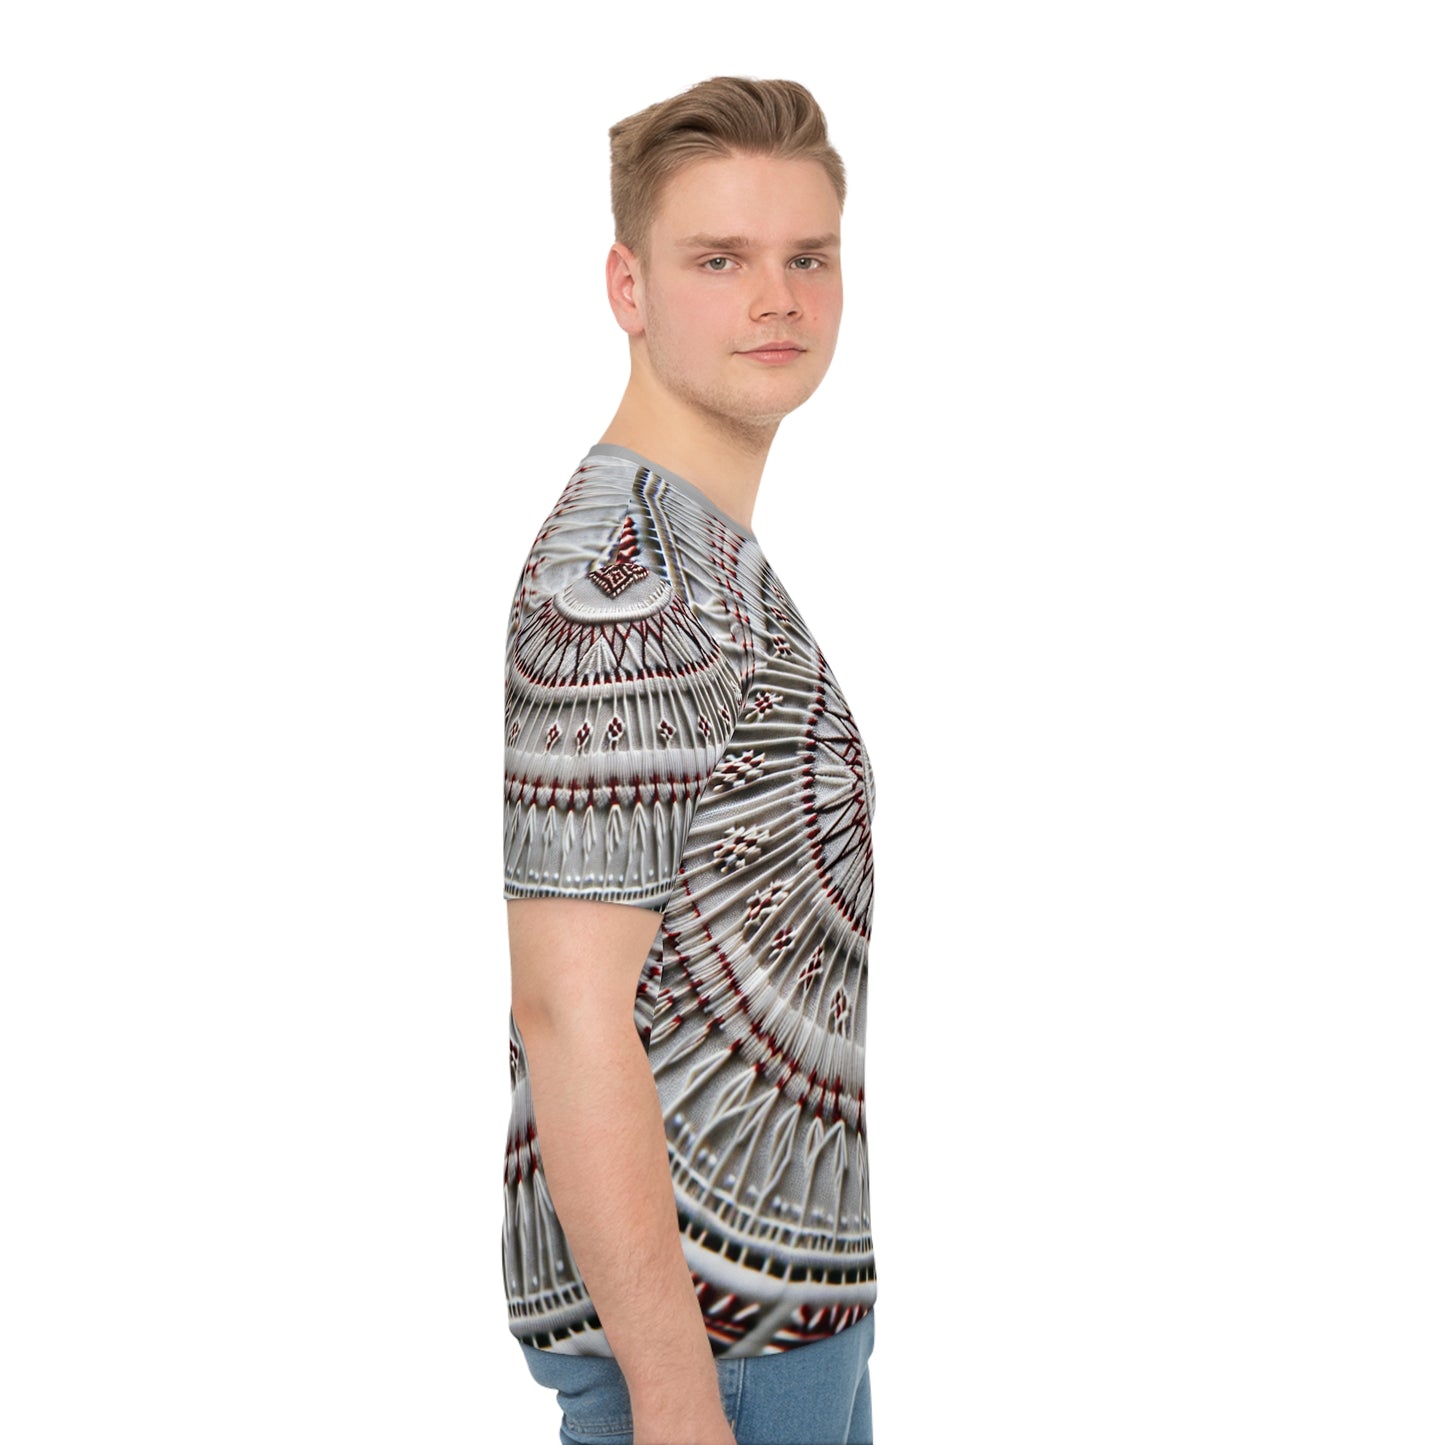 Twisted Threads of Belarus Men's T-shirt